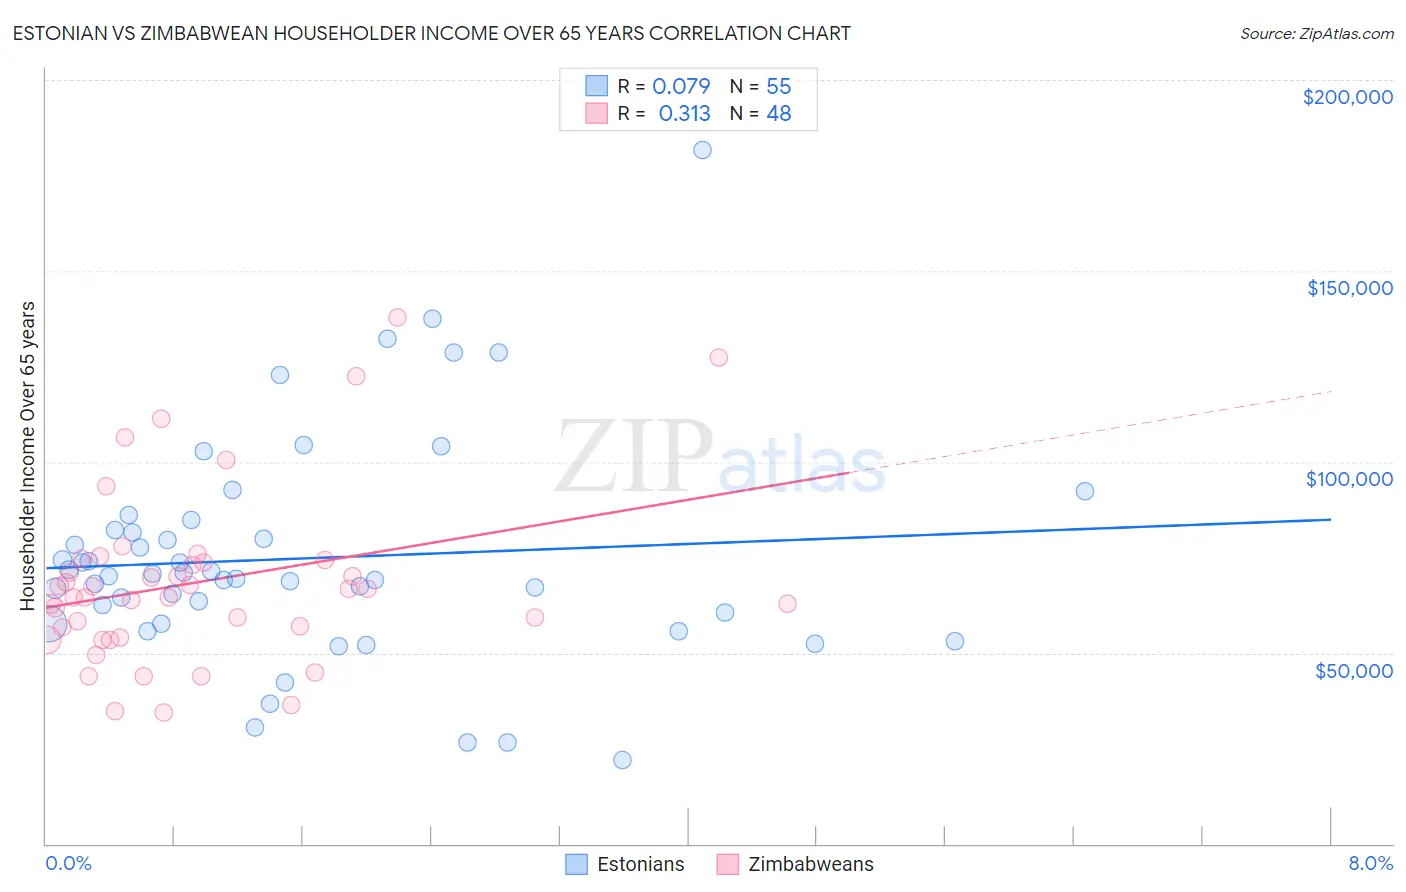 Estonian vs Zimbabwean Householder Income Over 65 years